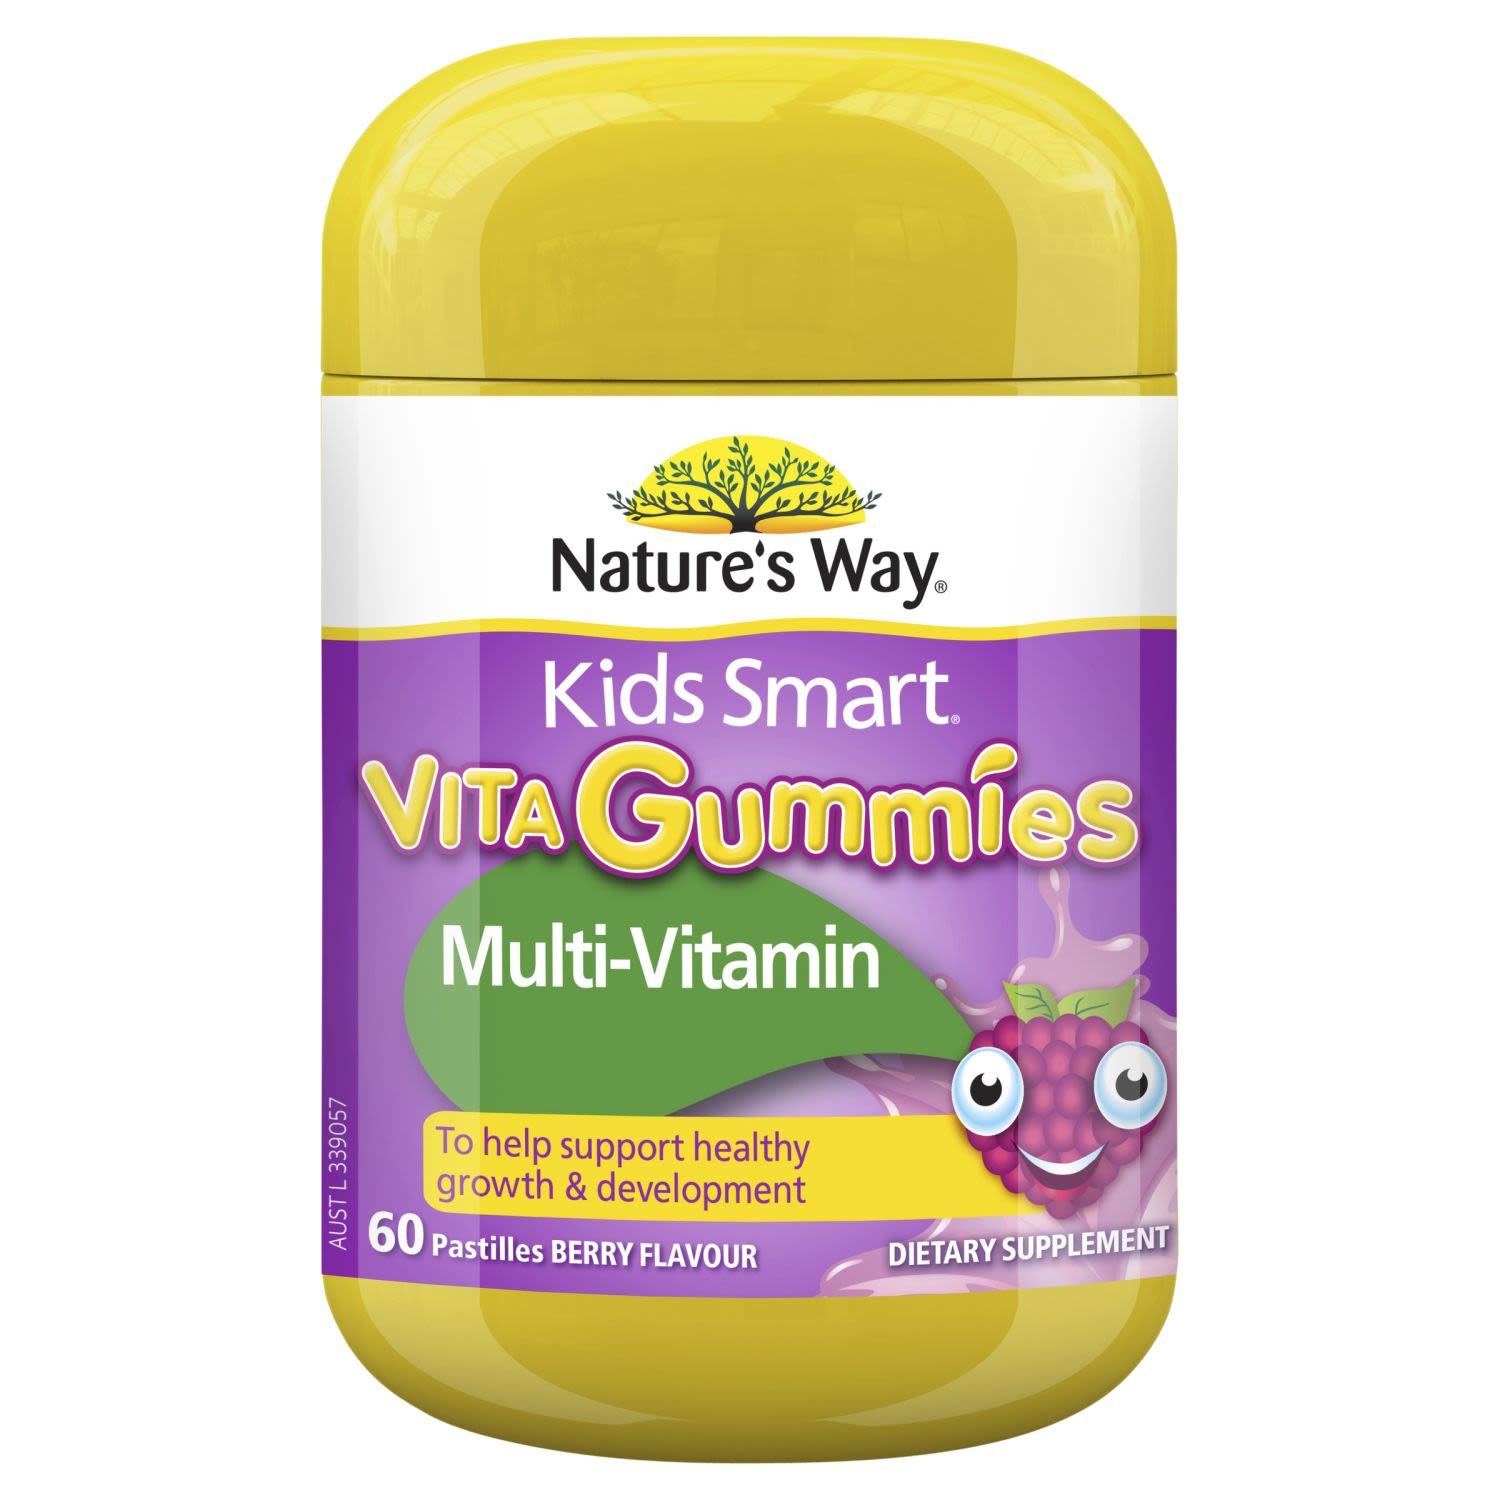 Nature's Way Kids Smart Vita Gummies Multi-Vitamin + Vegies, 60 Each